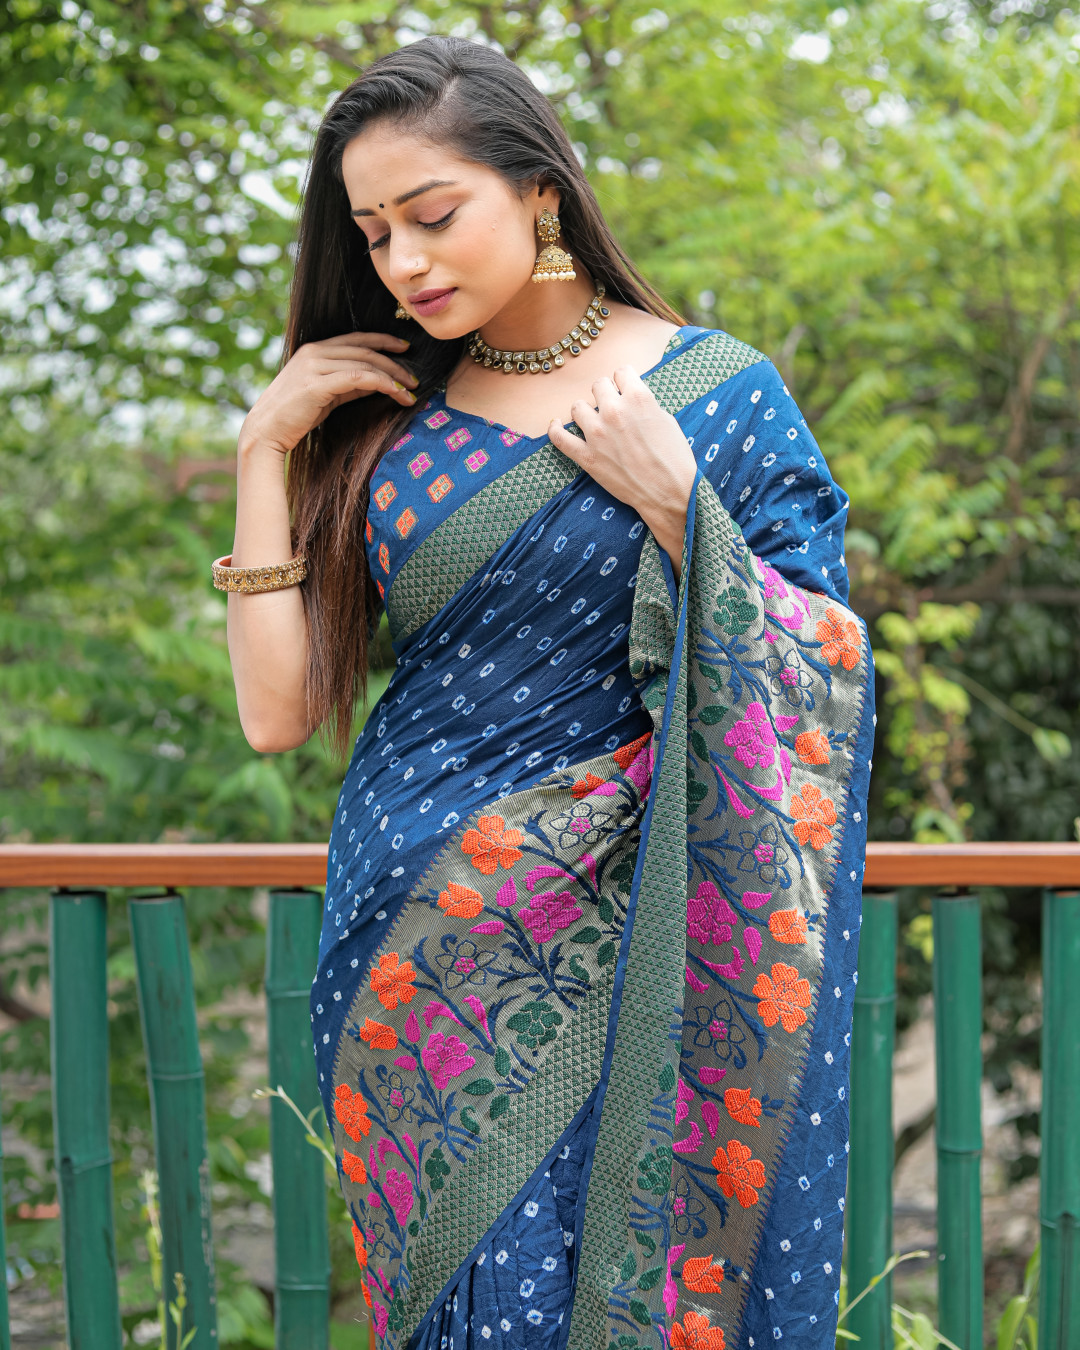 Firoji color bandhej silk saree with woven design